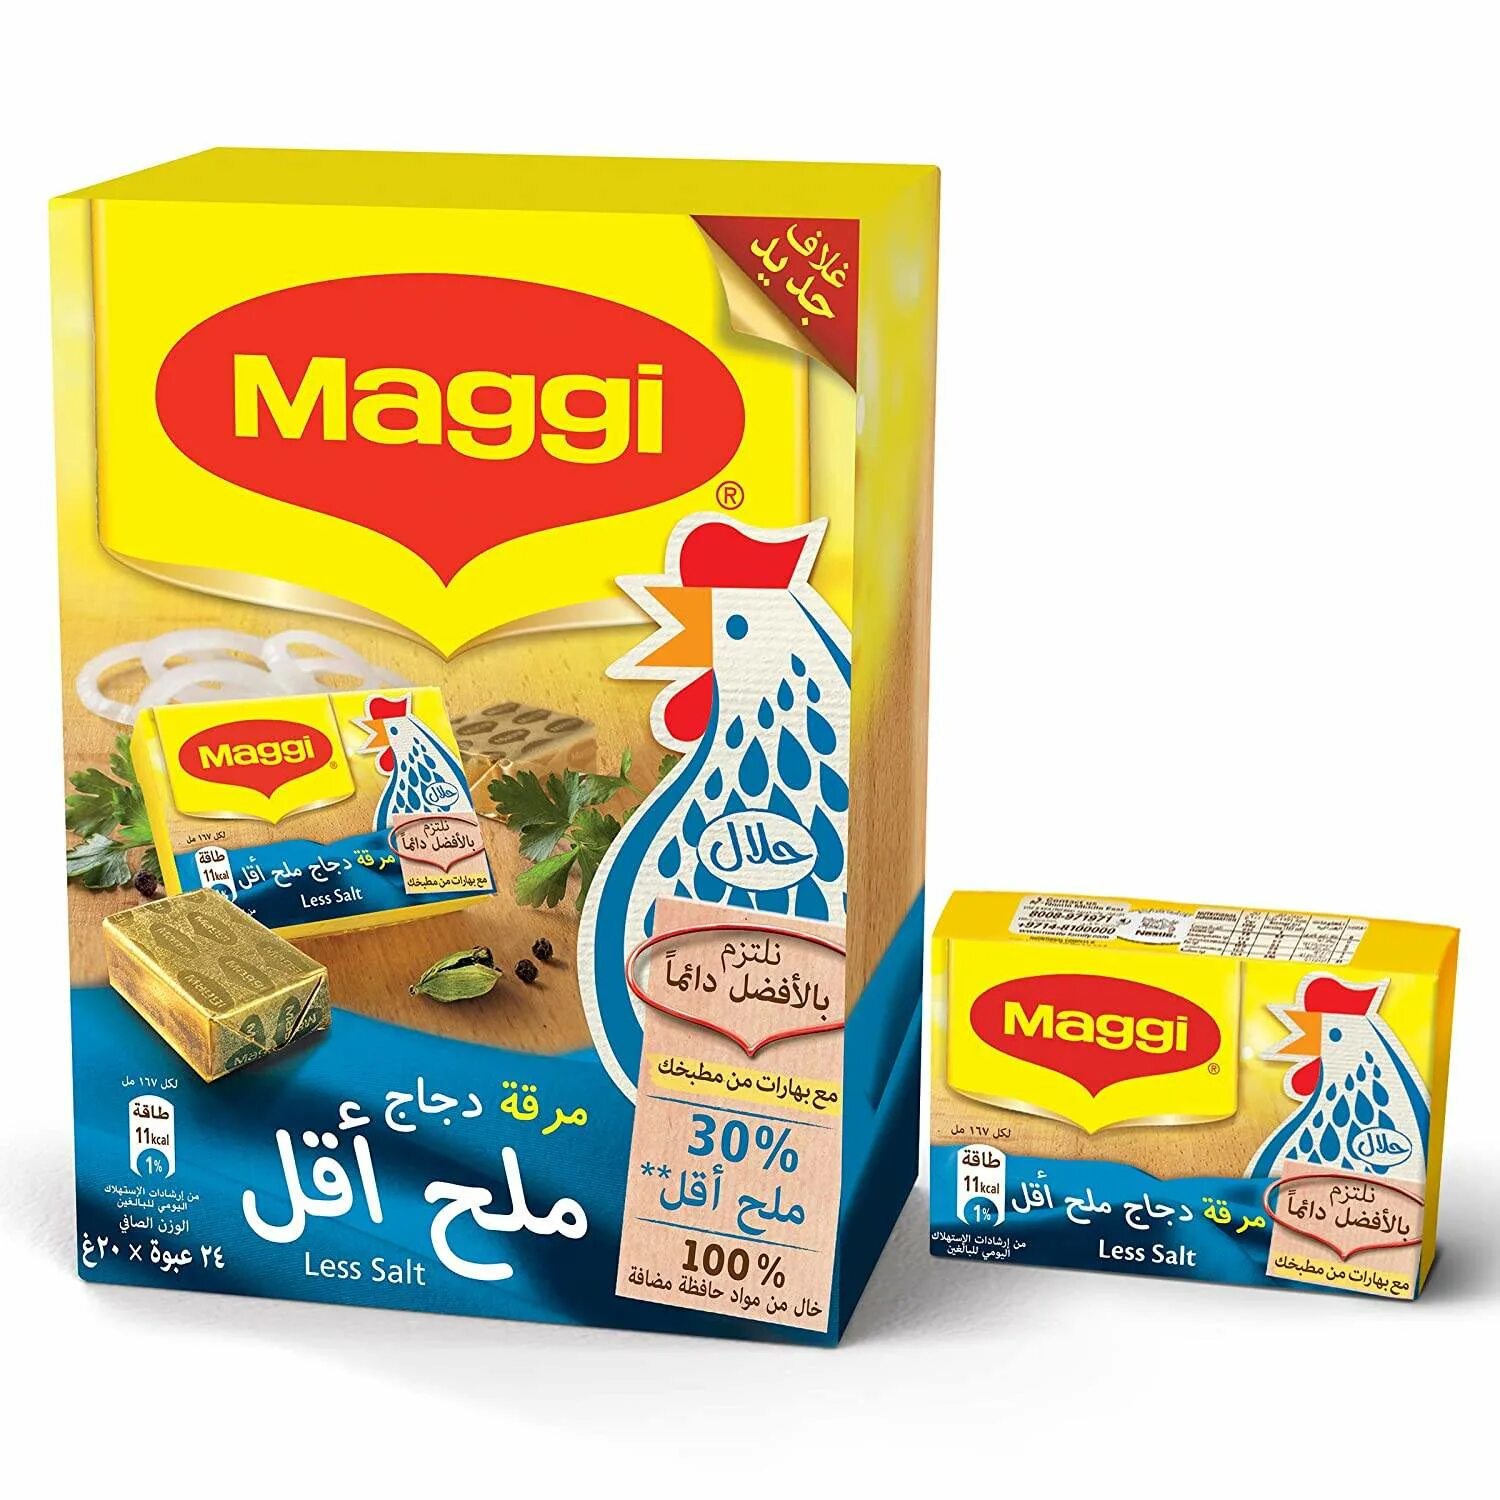 Кубик магги. Maggi Cube. Maggi Cube Chicken less Salt 20g. Кубик Магги арабский. Бутерброд с кубиком Магги.